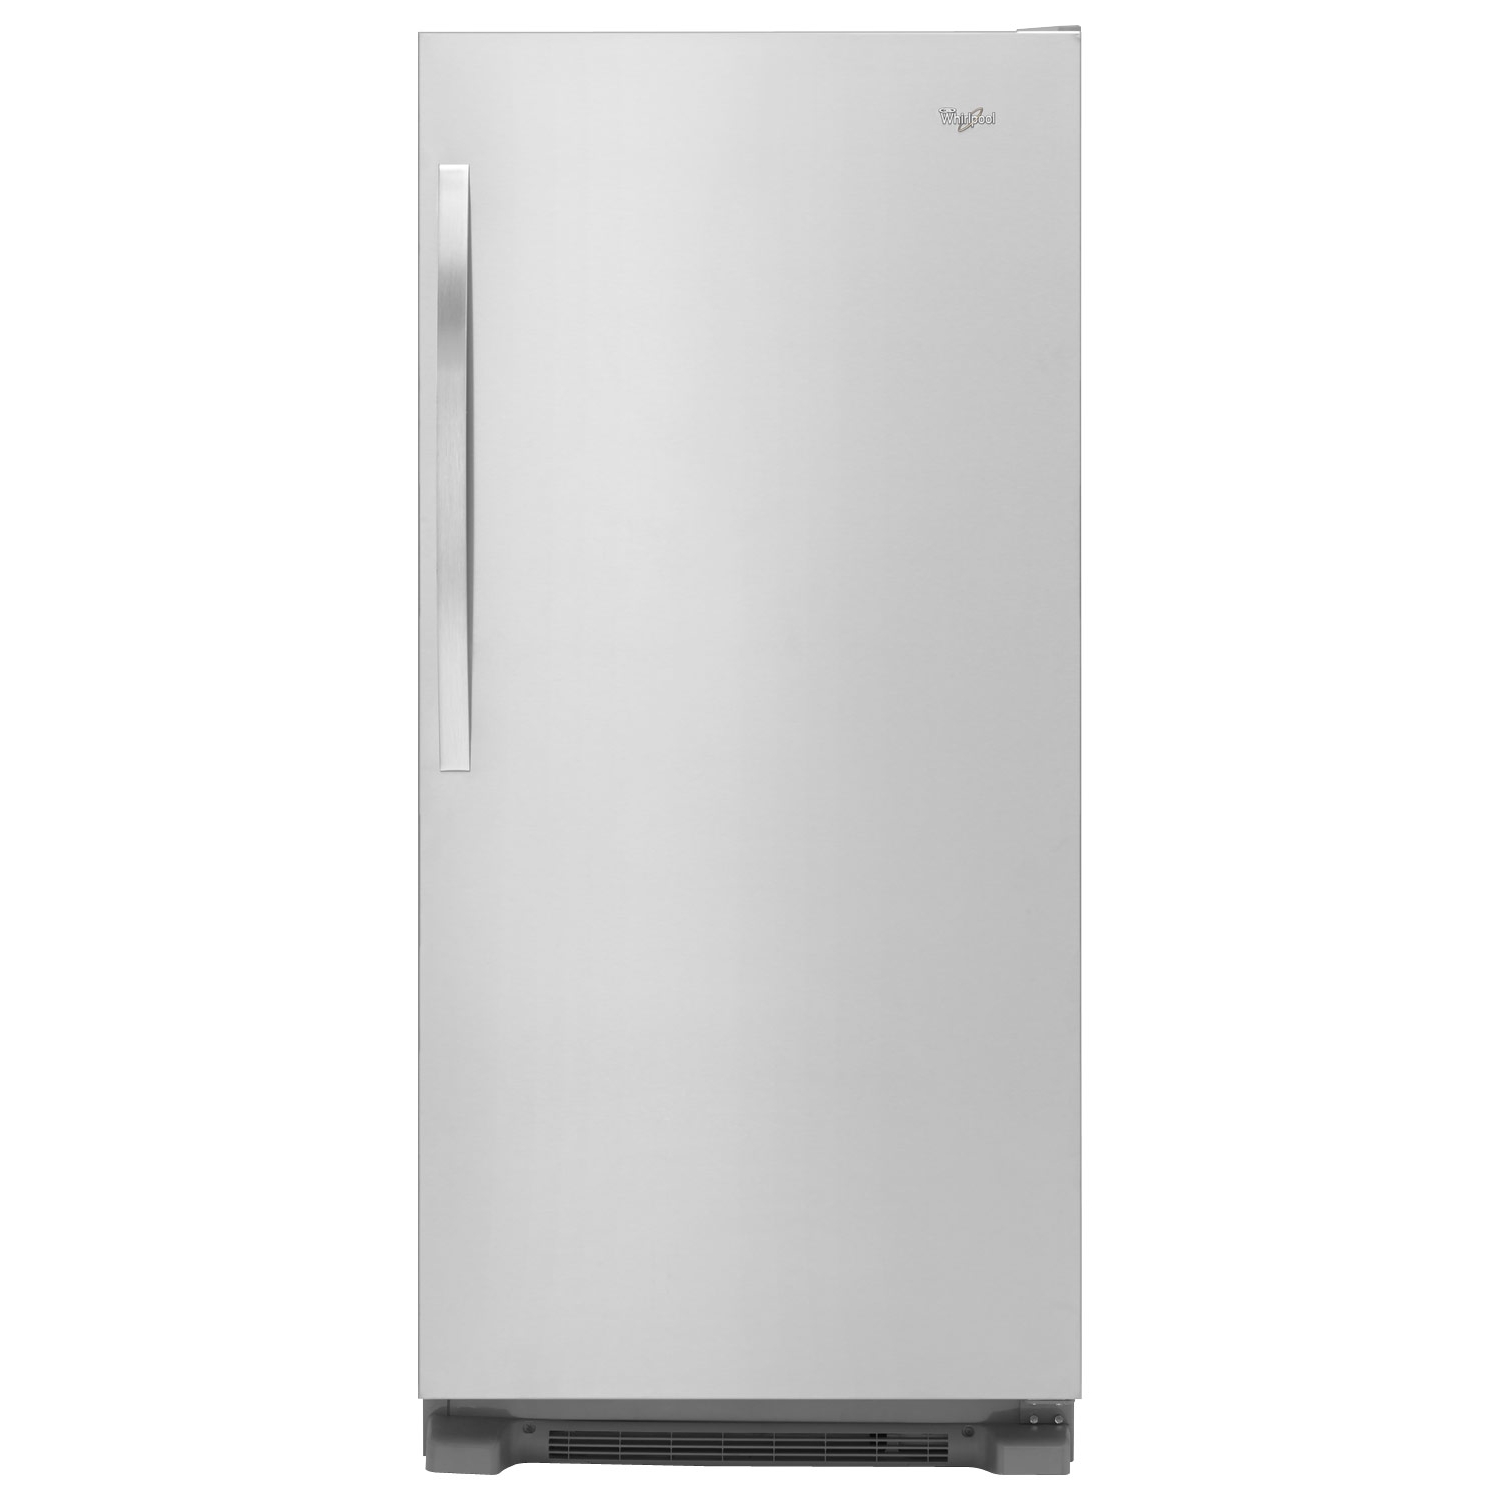 Buy Whirlpool Refrigerator WSR57R18DM